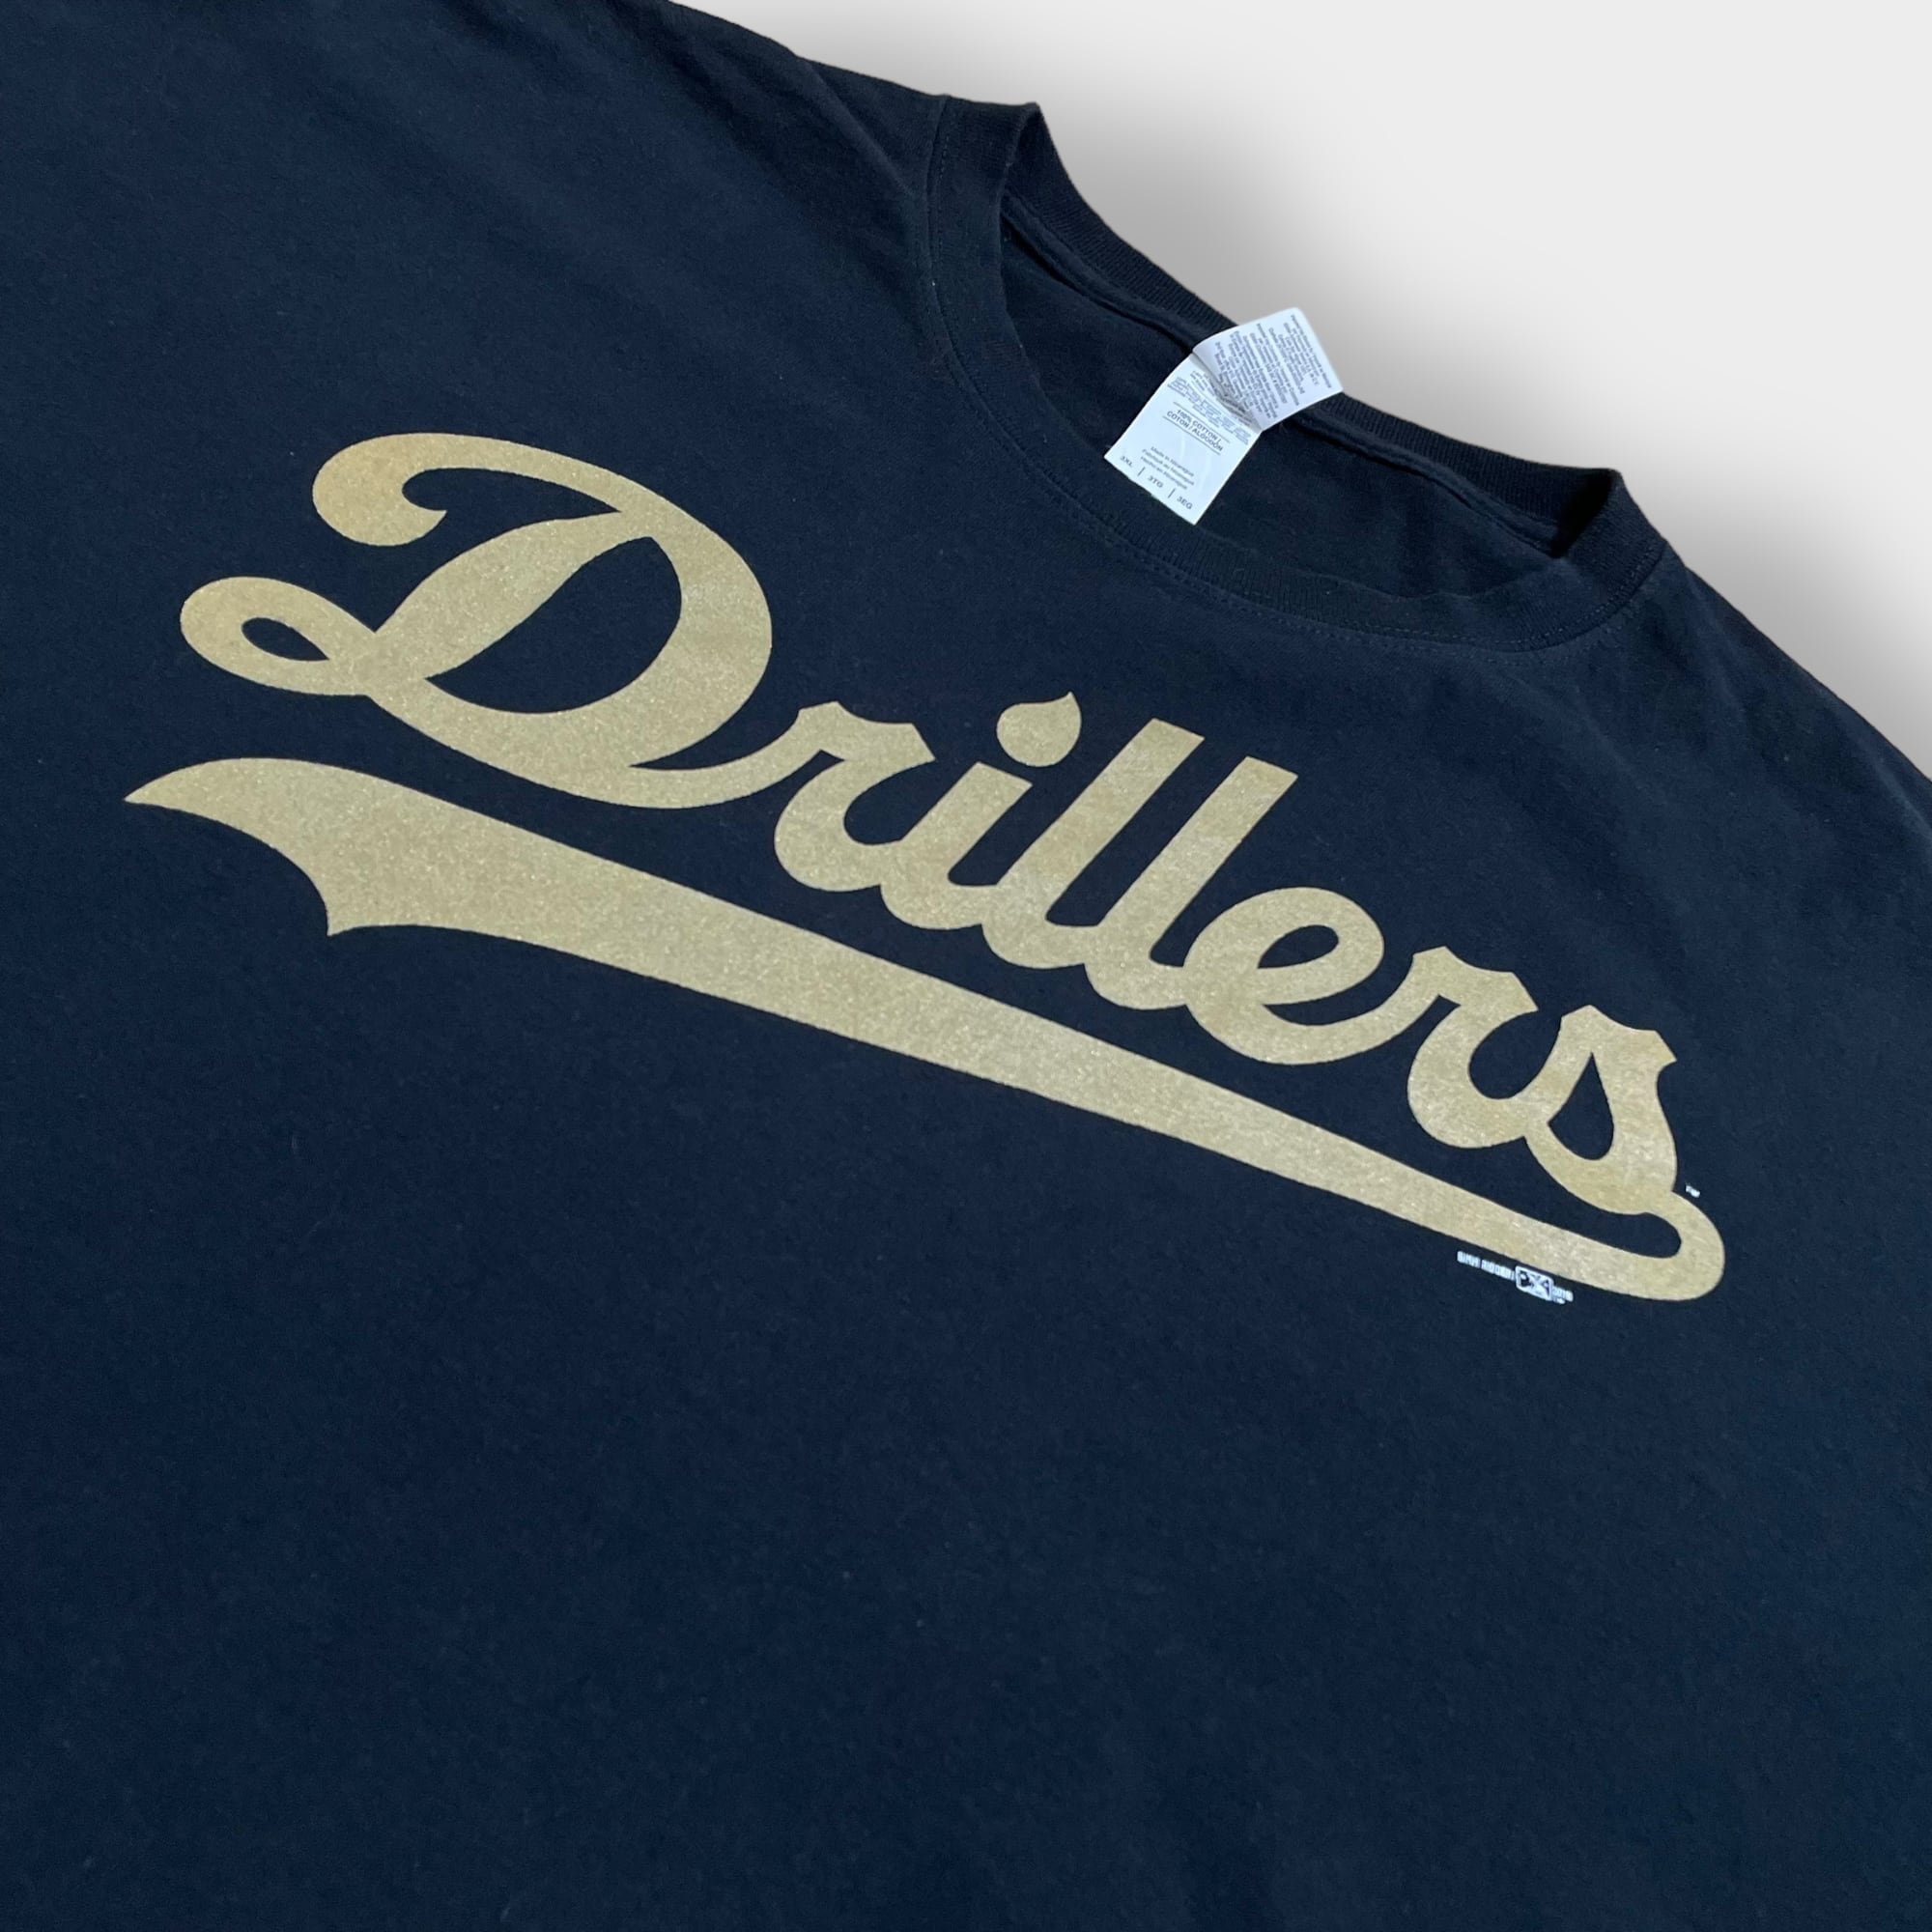 GILDAN】MiLB Drillers ベースボールロゴ プリント Tシャツ マイナー ...